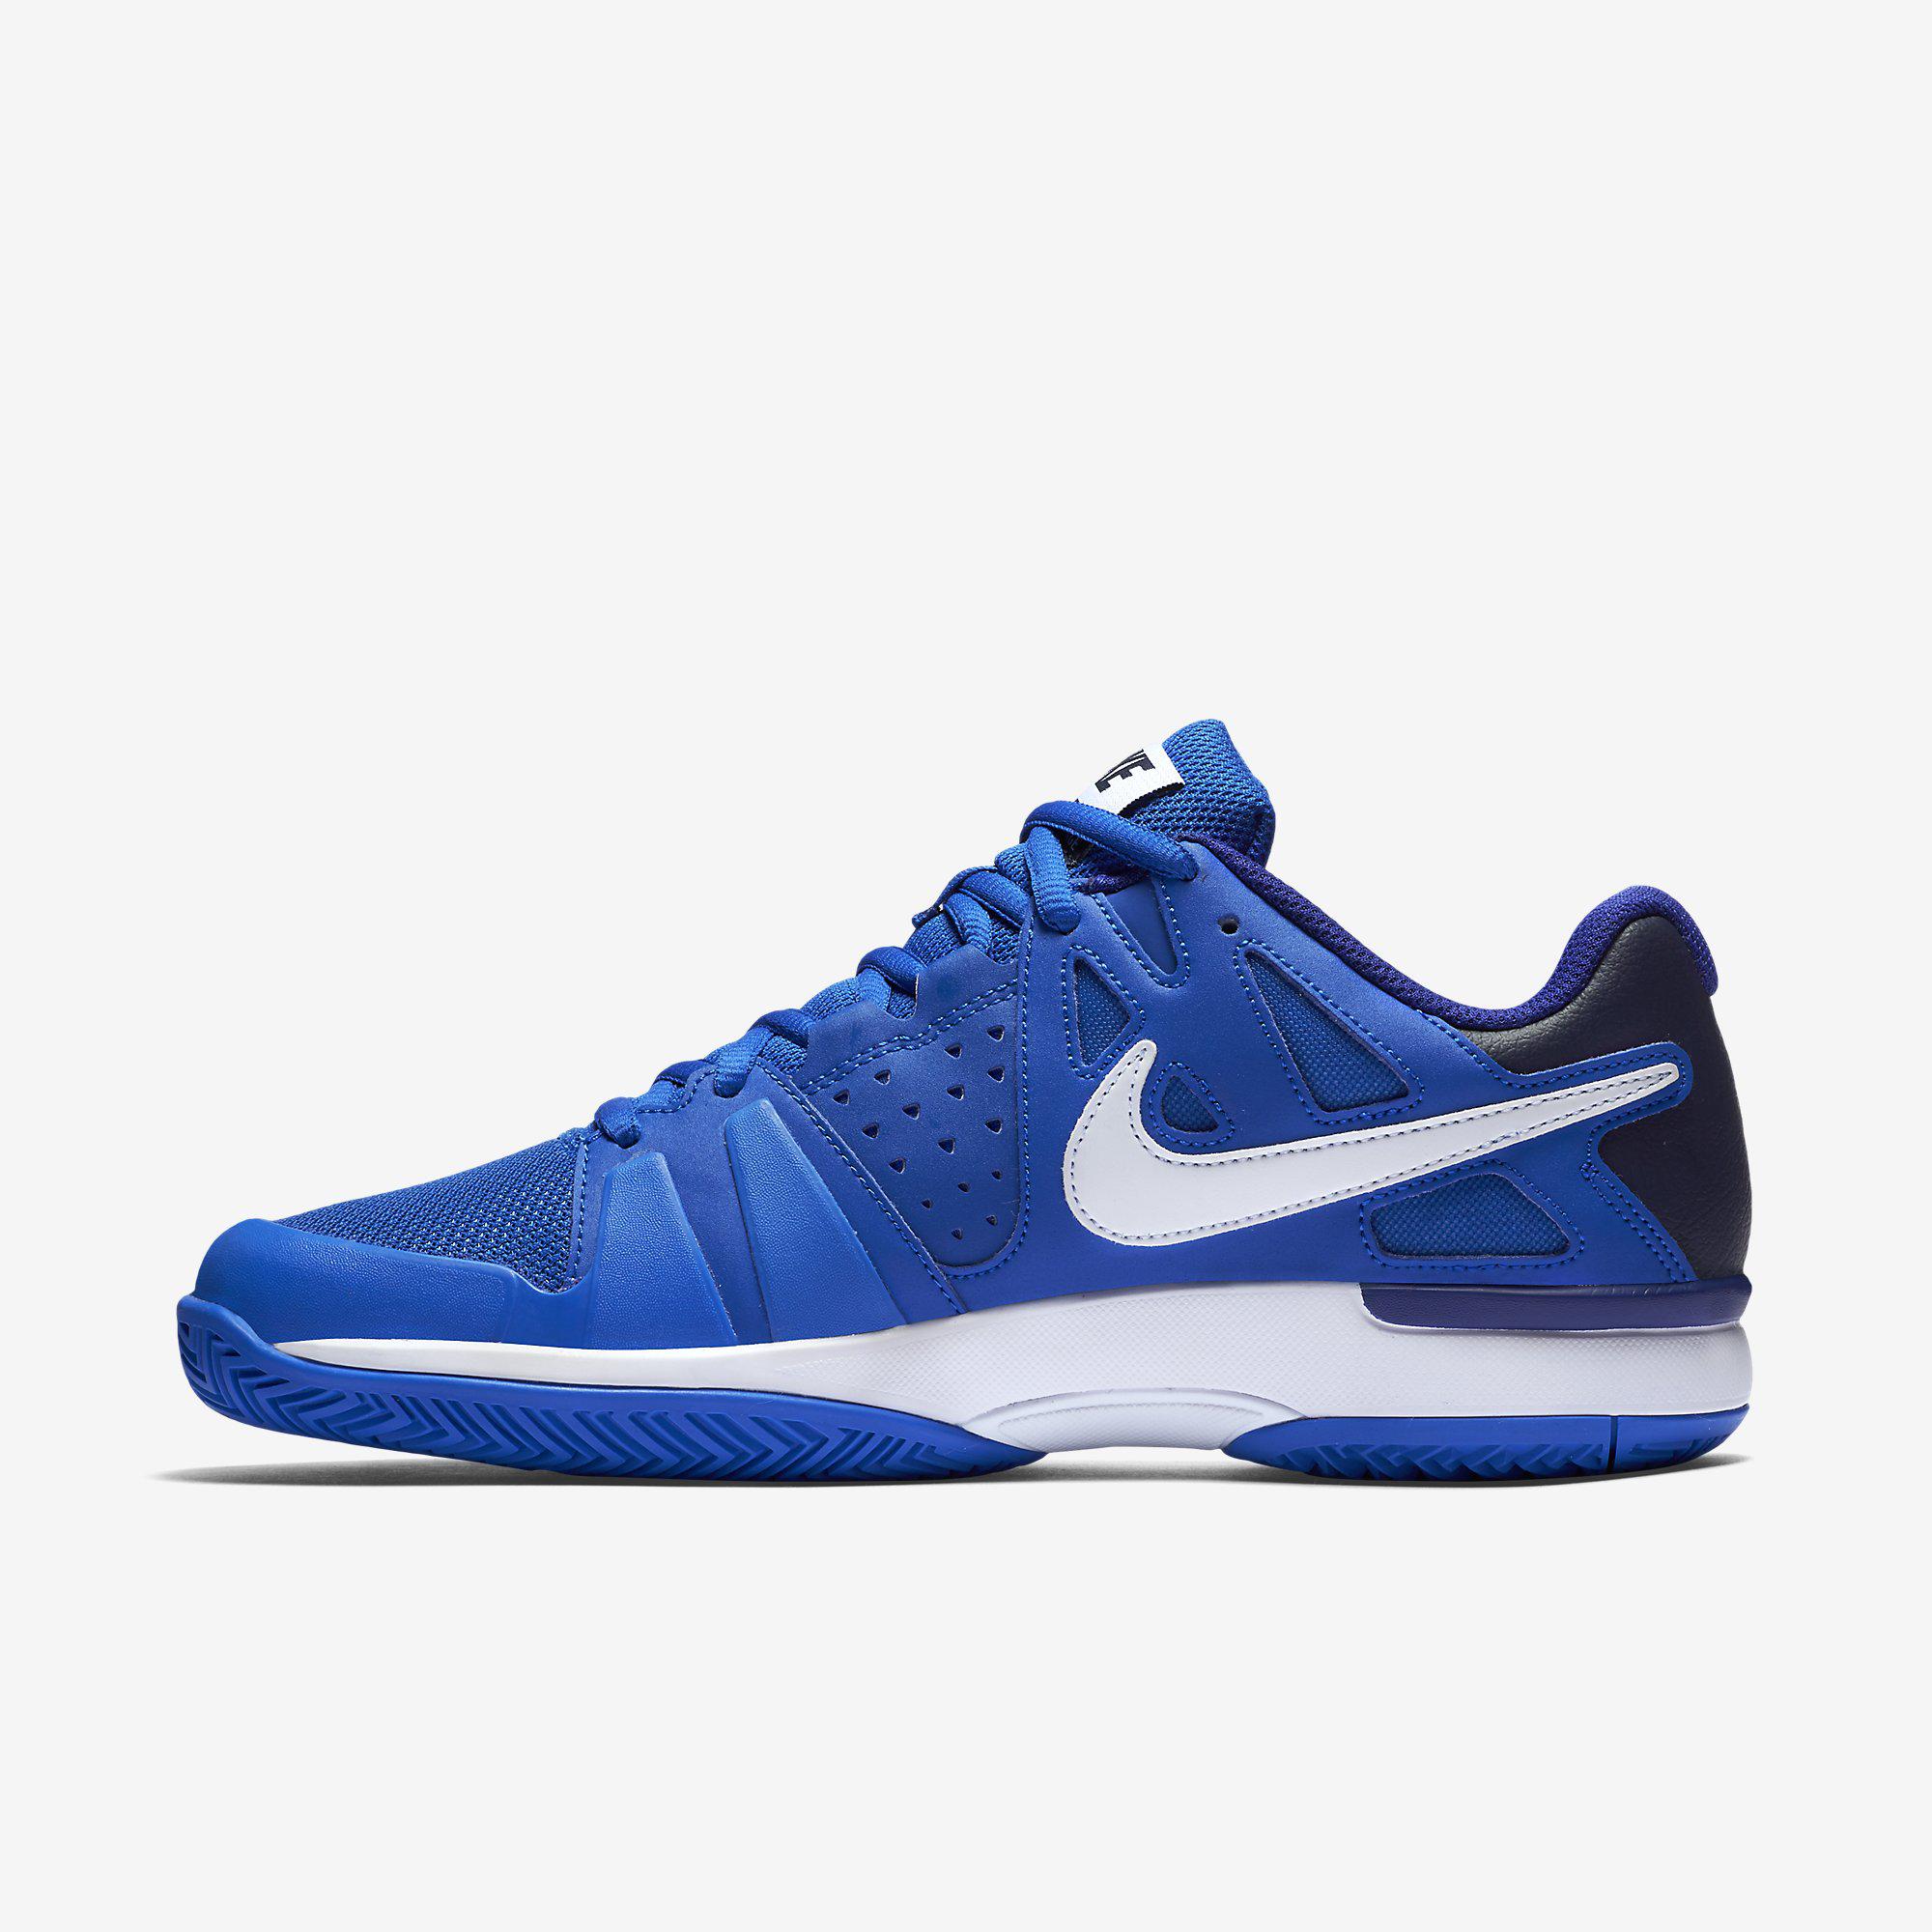 Nike Mens Air Vapor Advantage Tennis Shoes - Blue/White - Tennisnuts.com